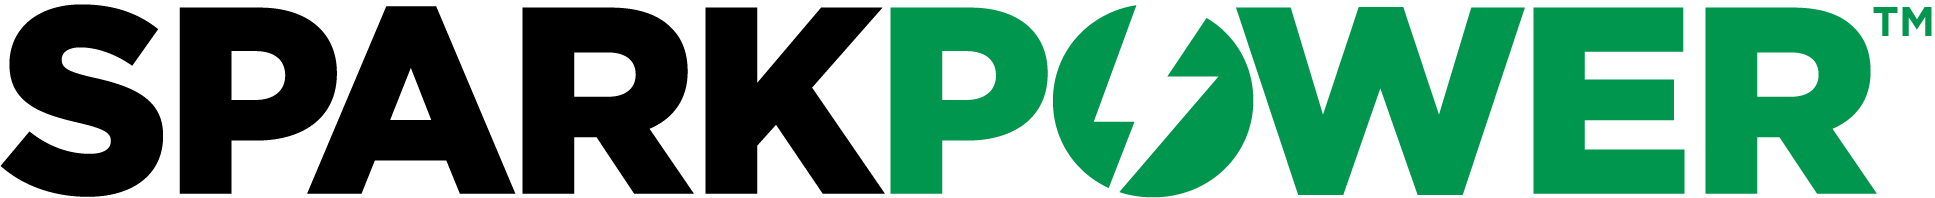 Spark POwer logo (1)